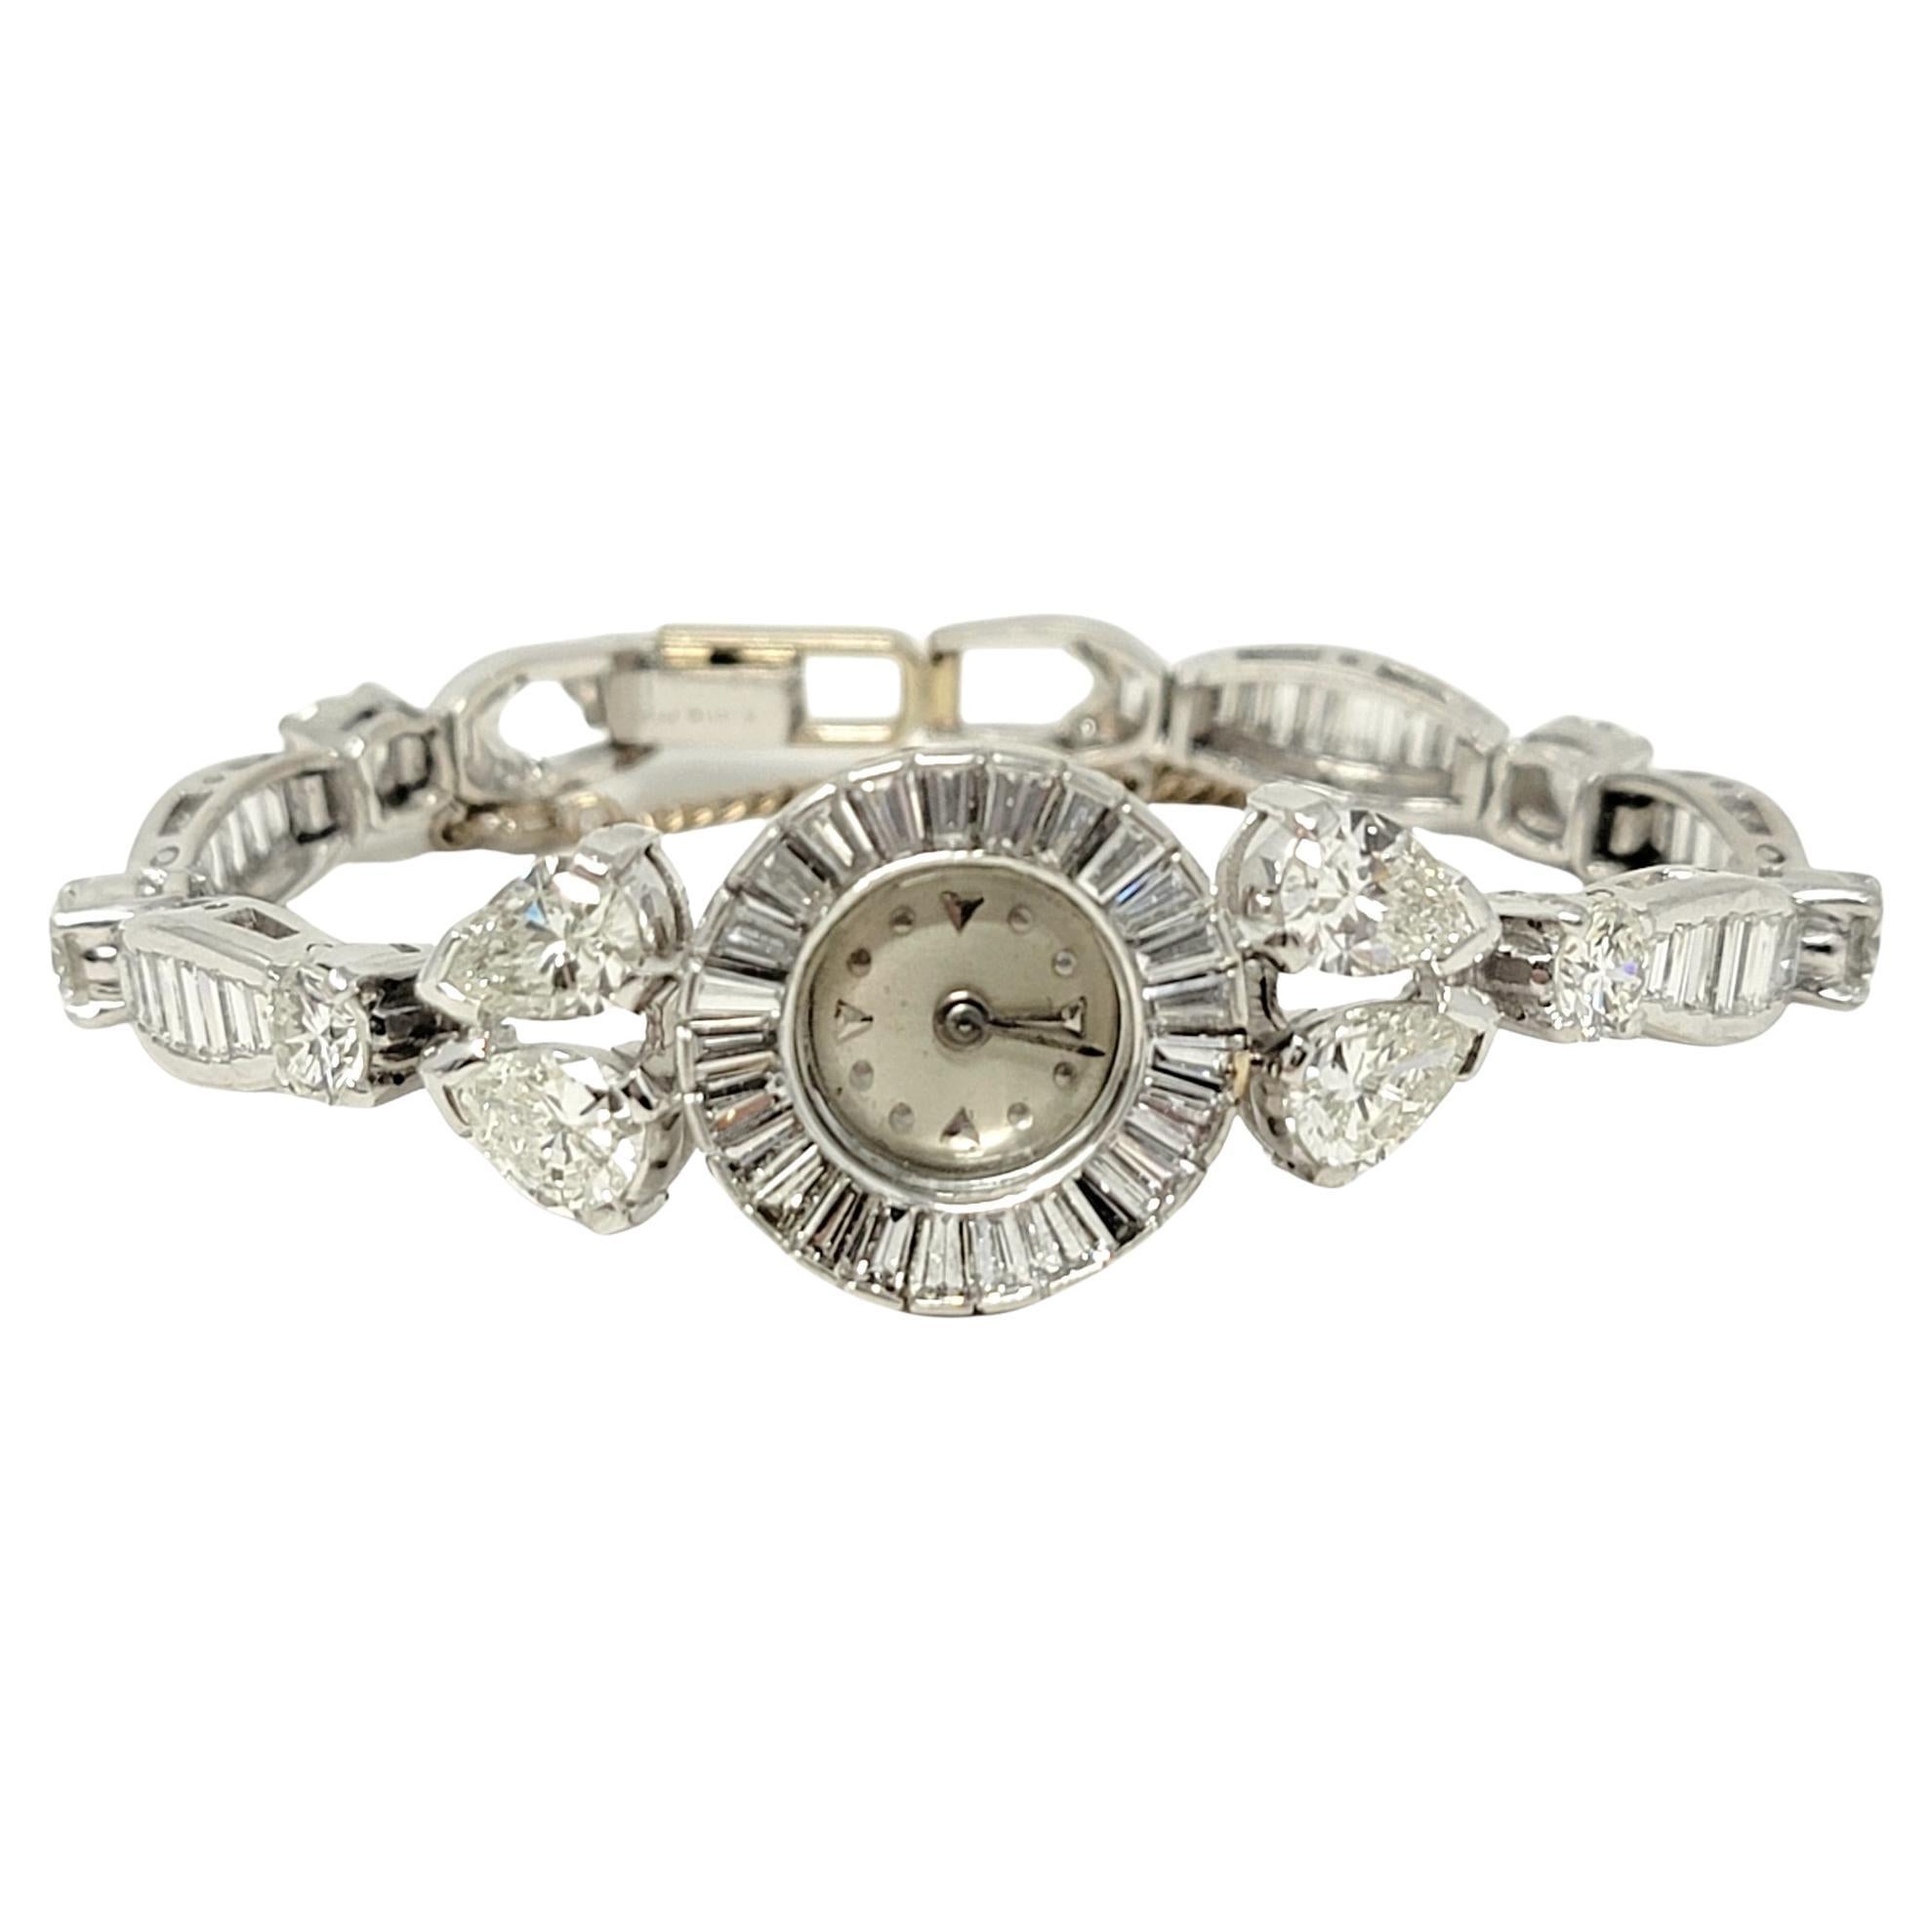 Vintage Ladies Platinum and Diamond Link Wristwatch 9.23 Carats Total